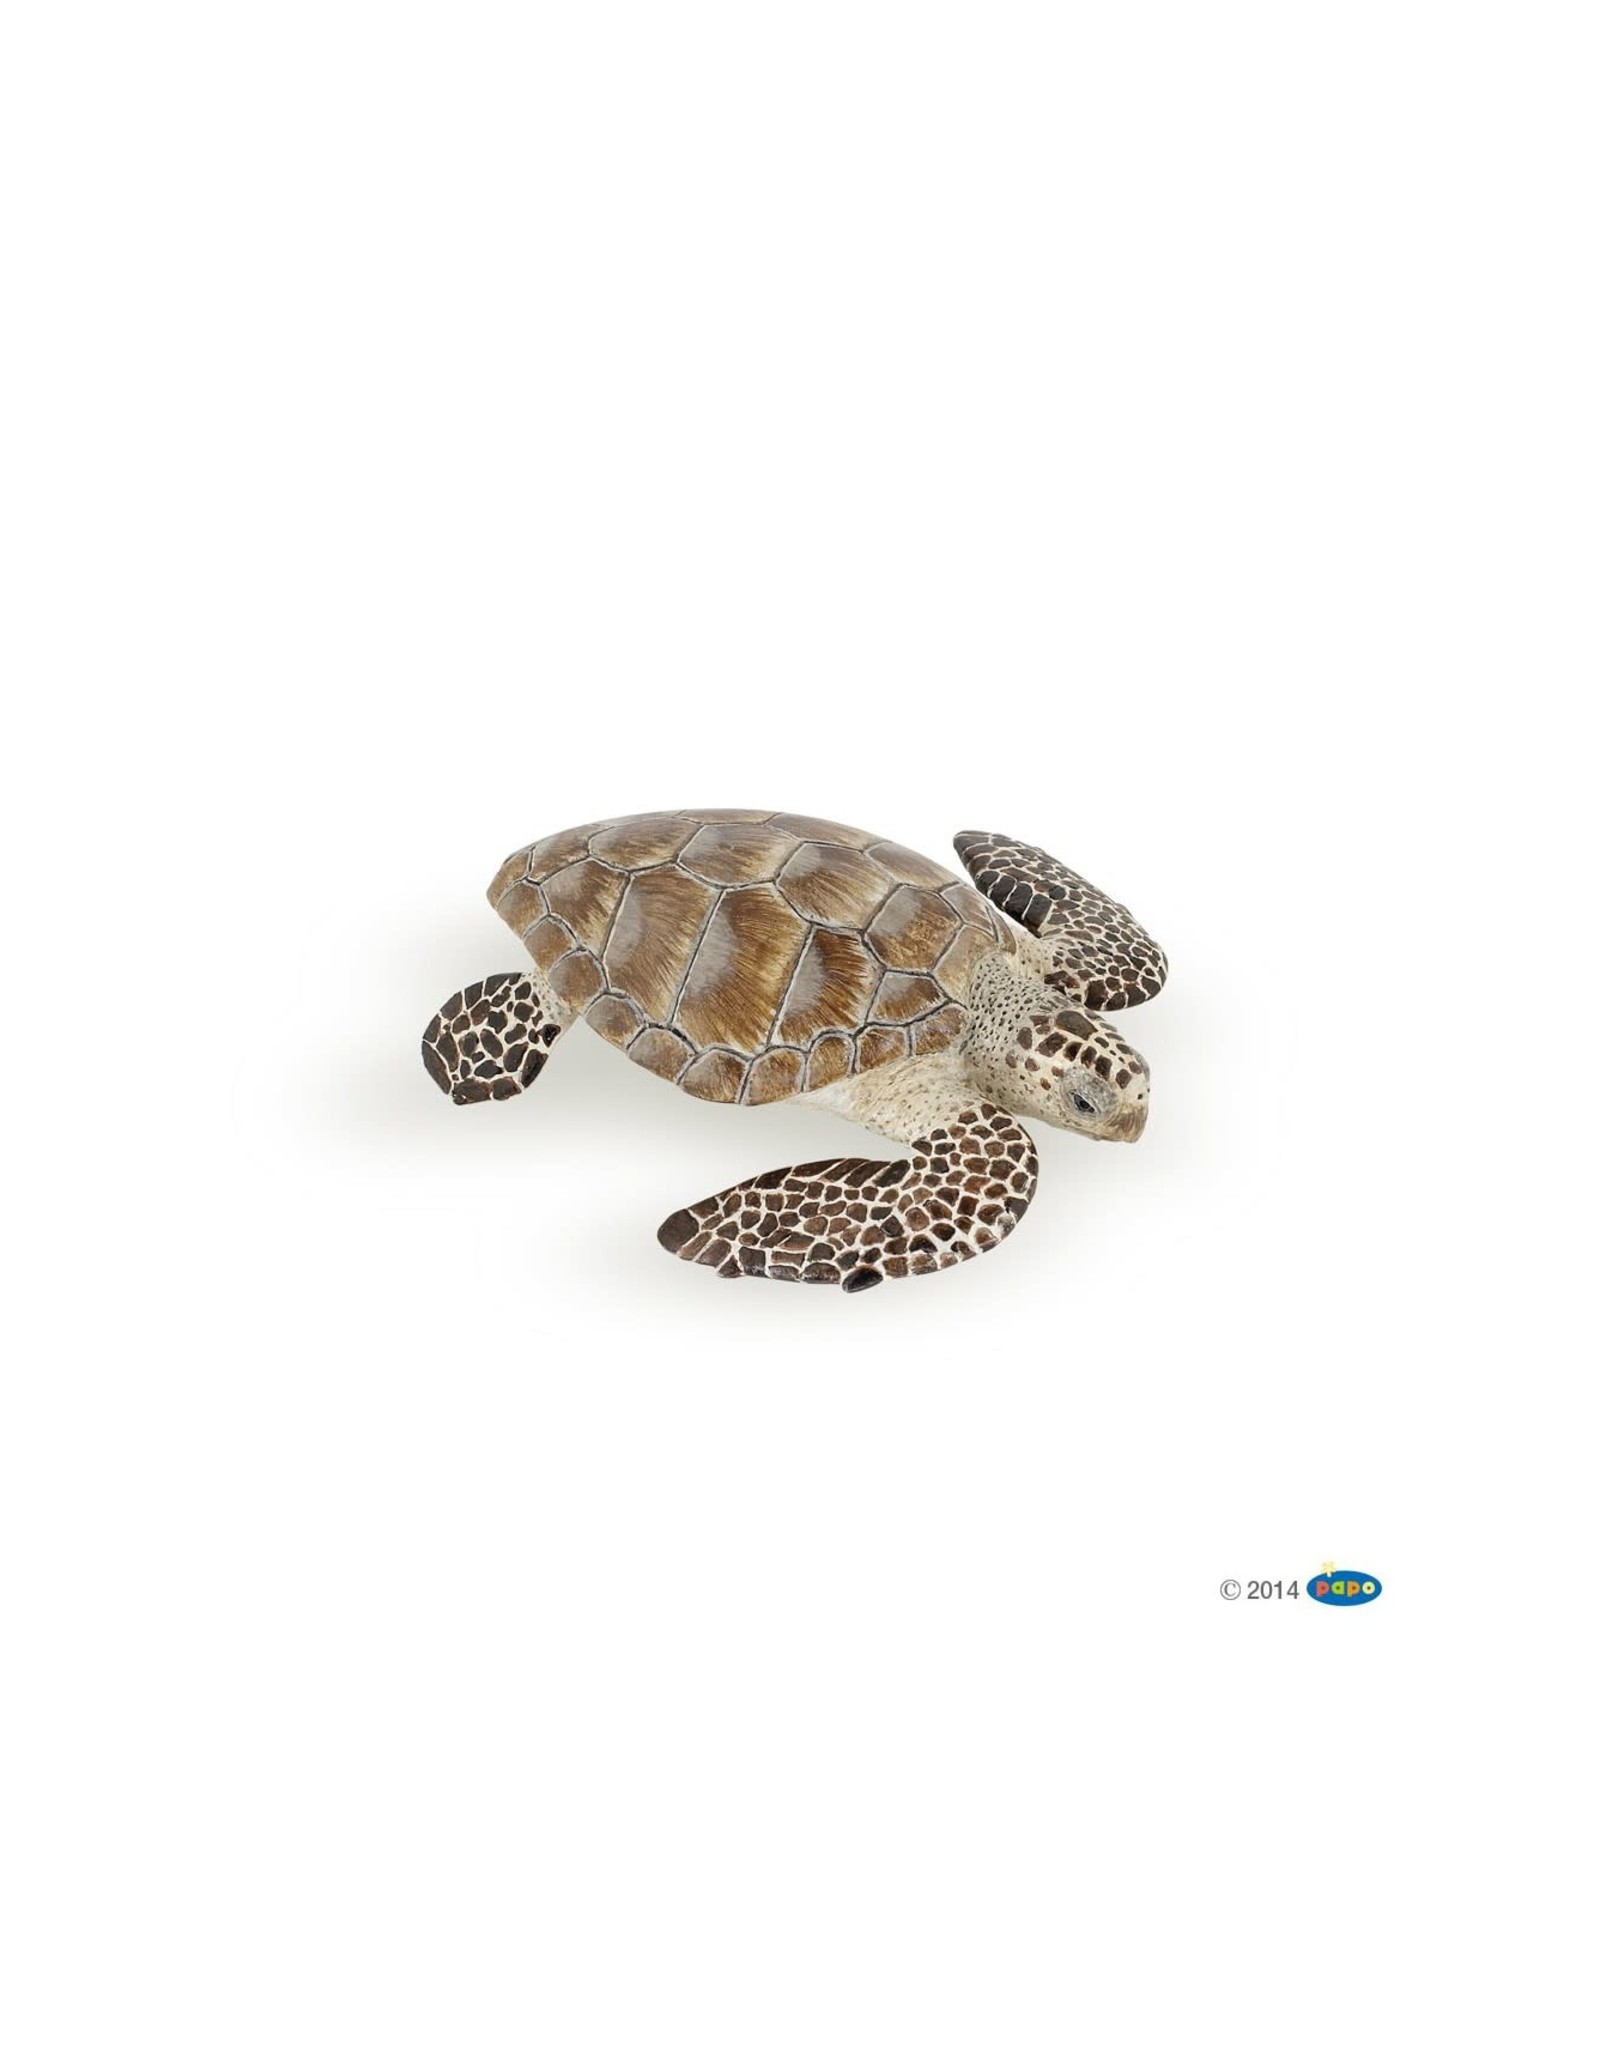 Hotaling PAPO: Loggerhead Turtle